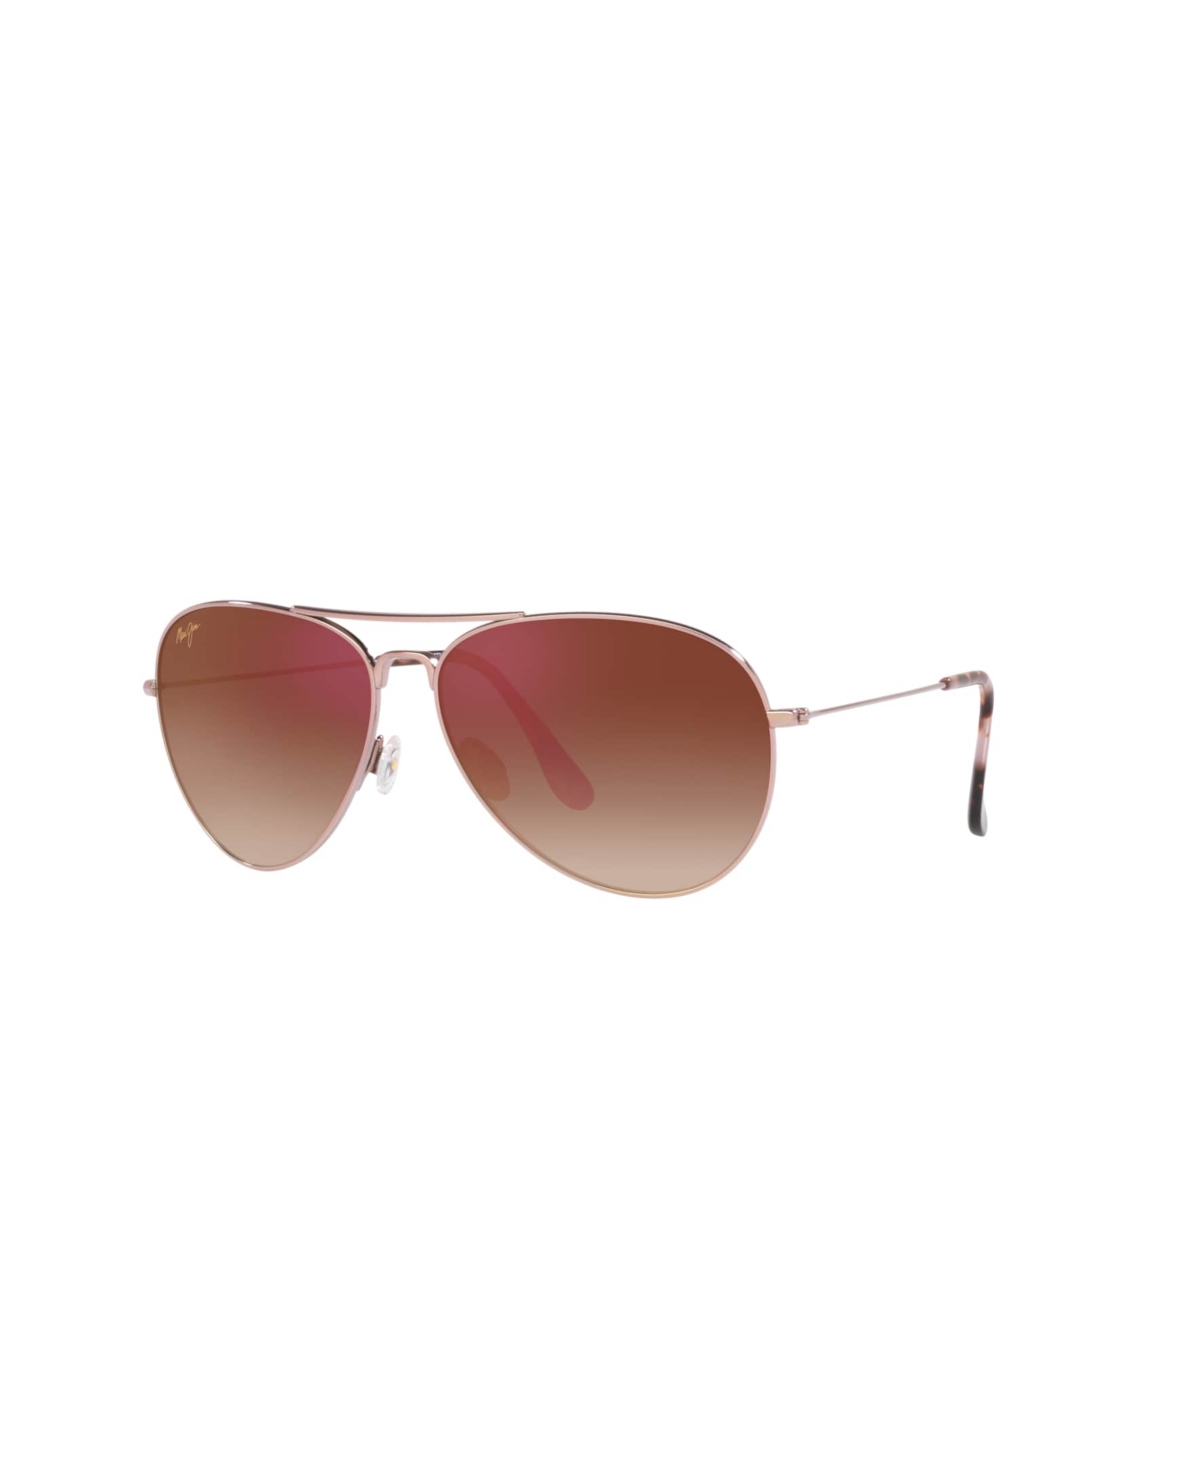 Polarized Mavericks Sunglasses, 264 - Gold Pink Shiny